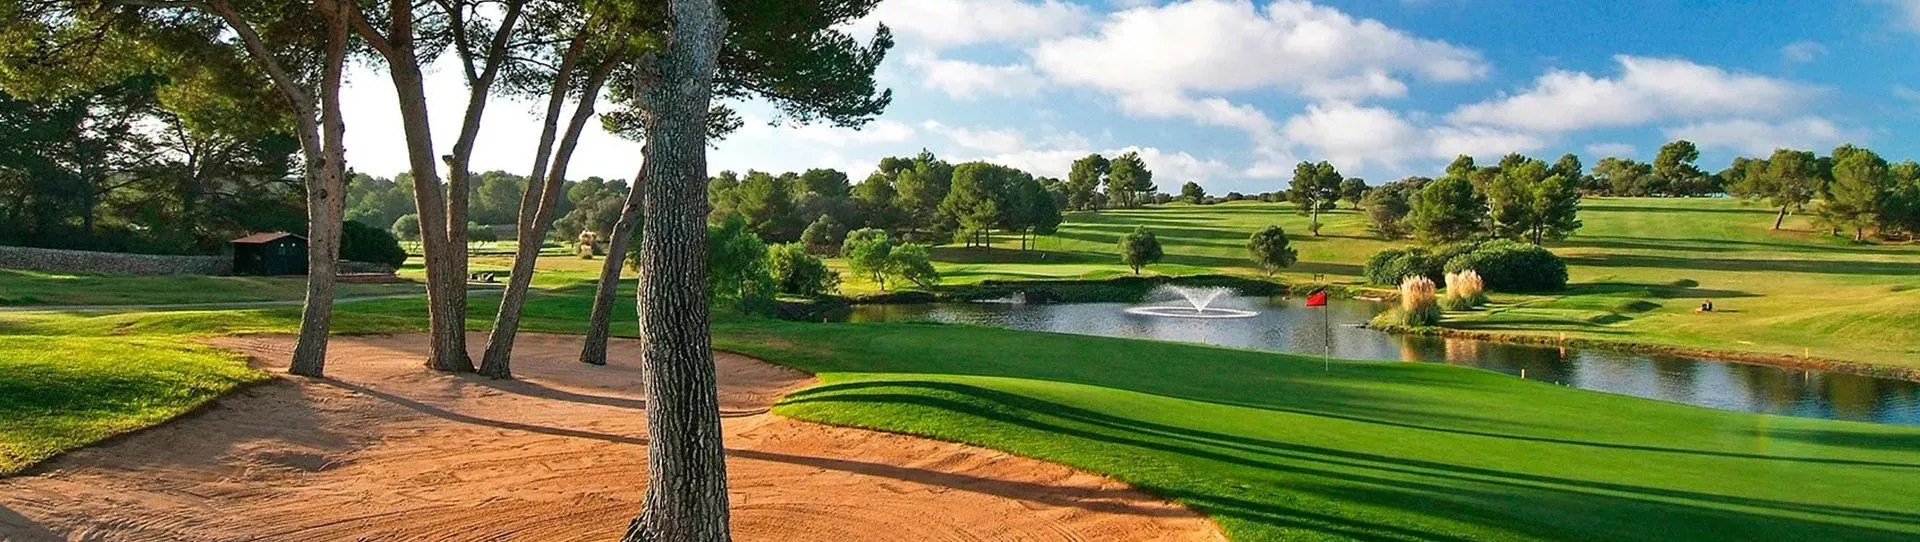 Spain golf courses - Maioris Golf Course - Photo 1